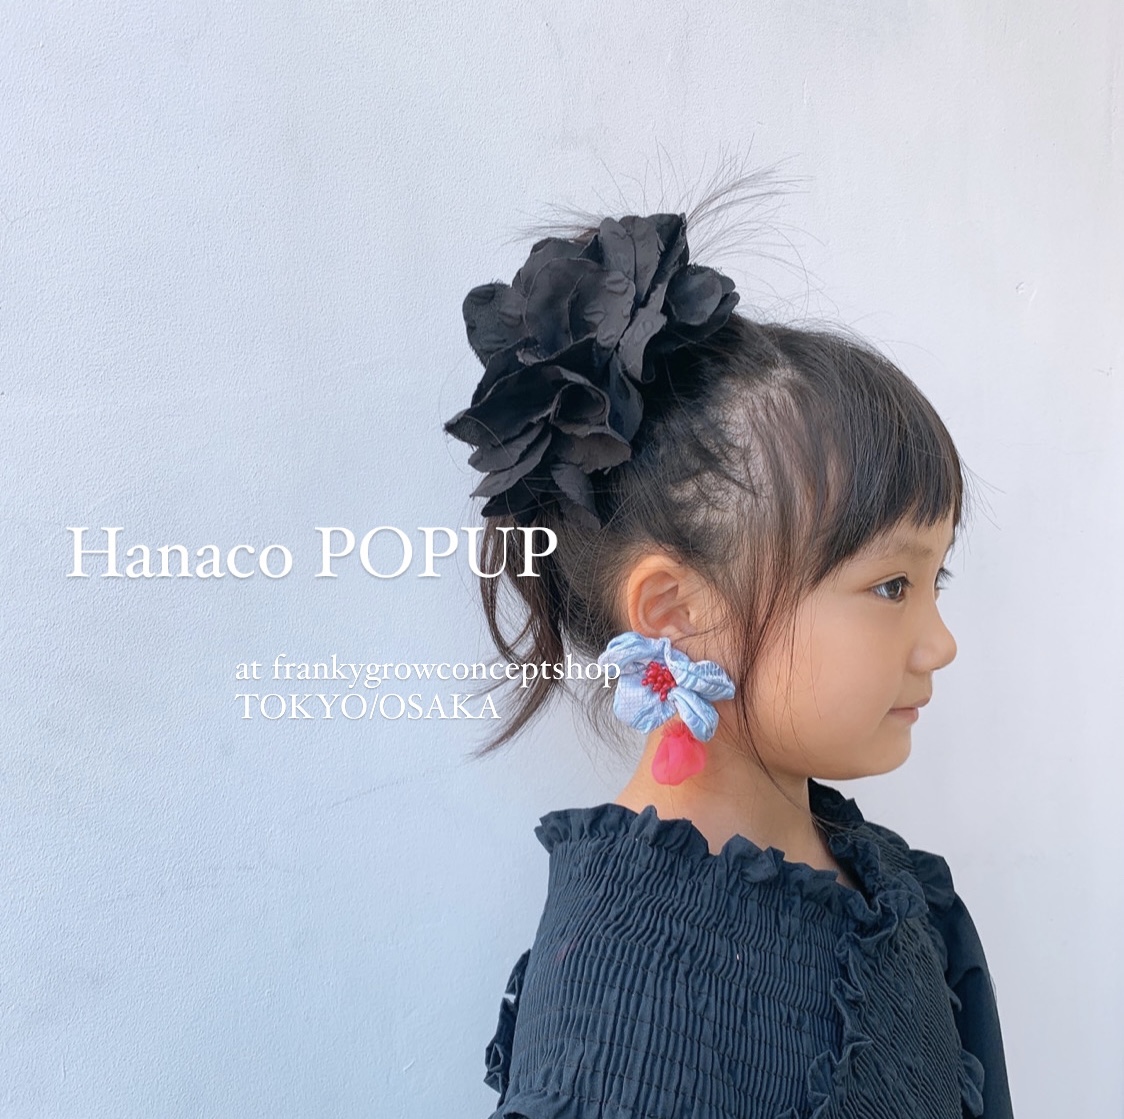 Hanaco POPUP repo 2